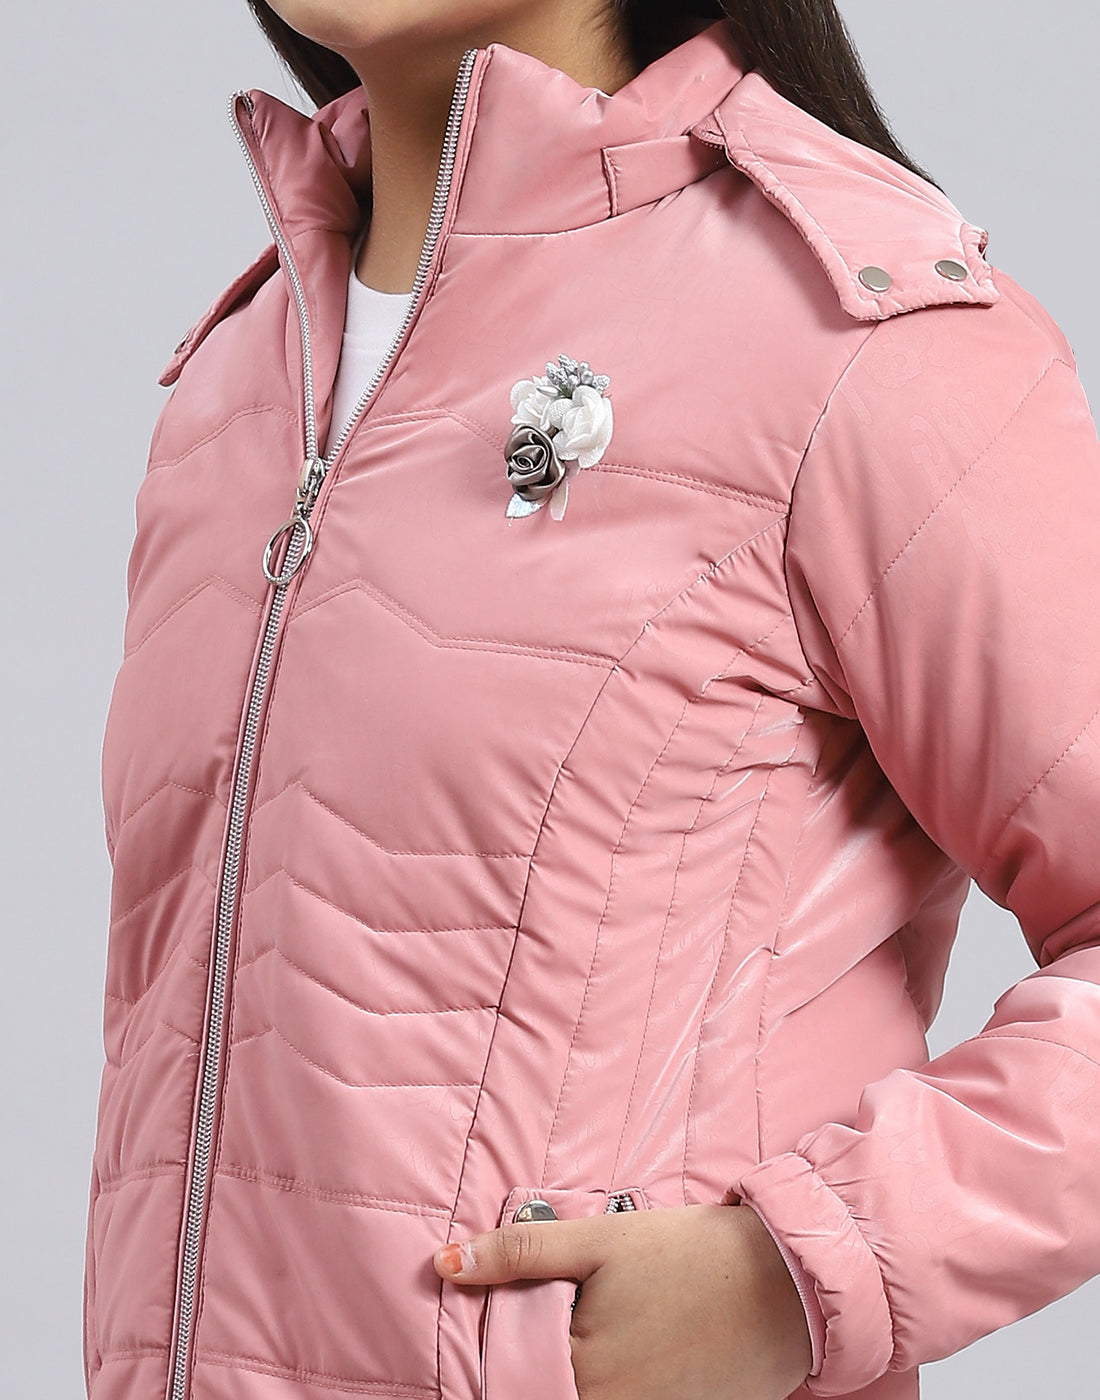 Girls Pink Printed Hooded Full Sleeve Girls Jacket